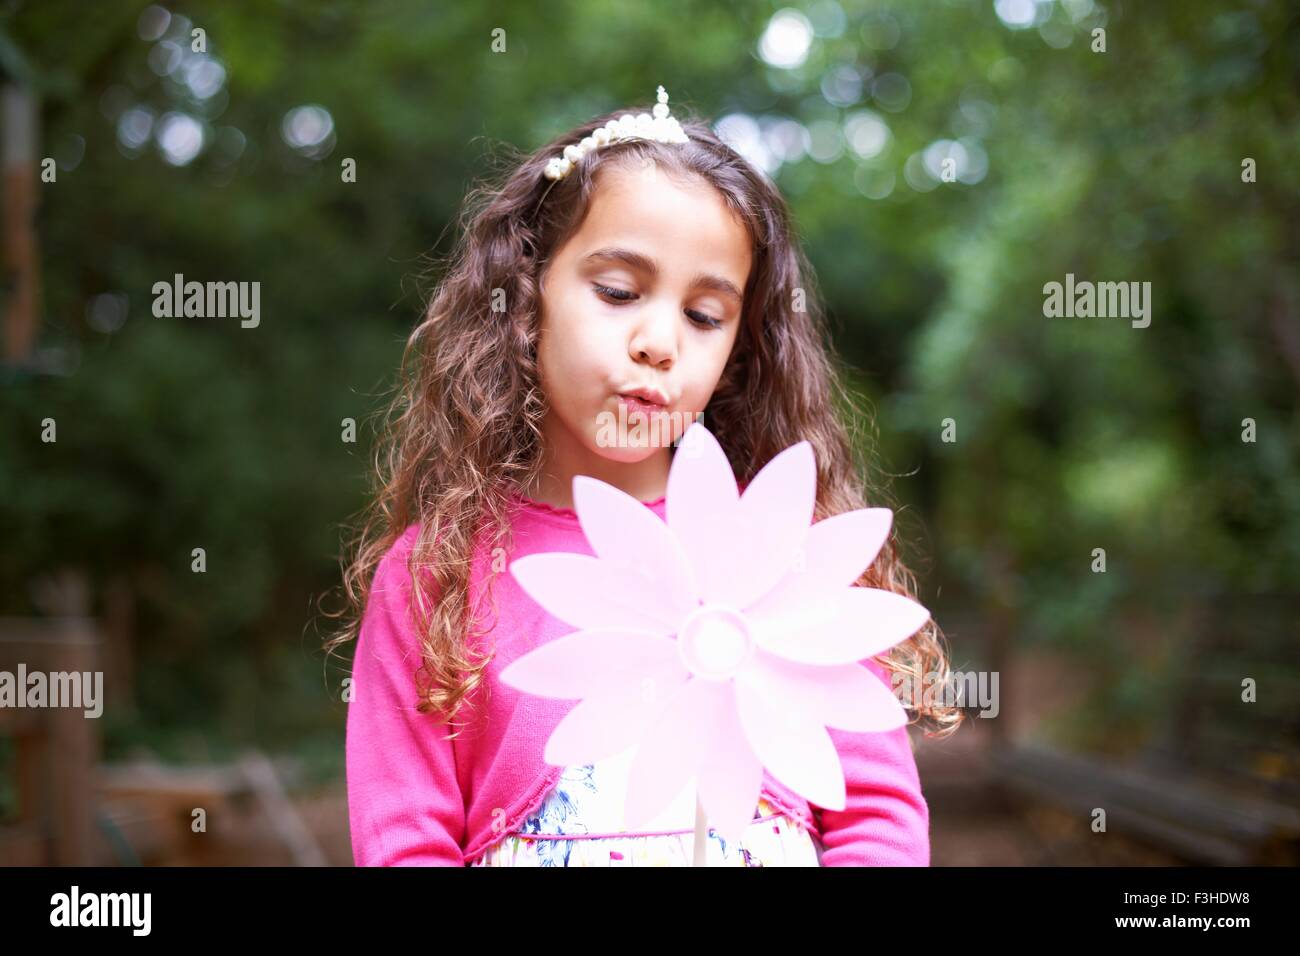 Mädchen bläst Windrad Blume im Garten Geburtstagsfeier Stockfoto